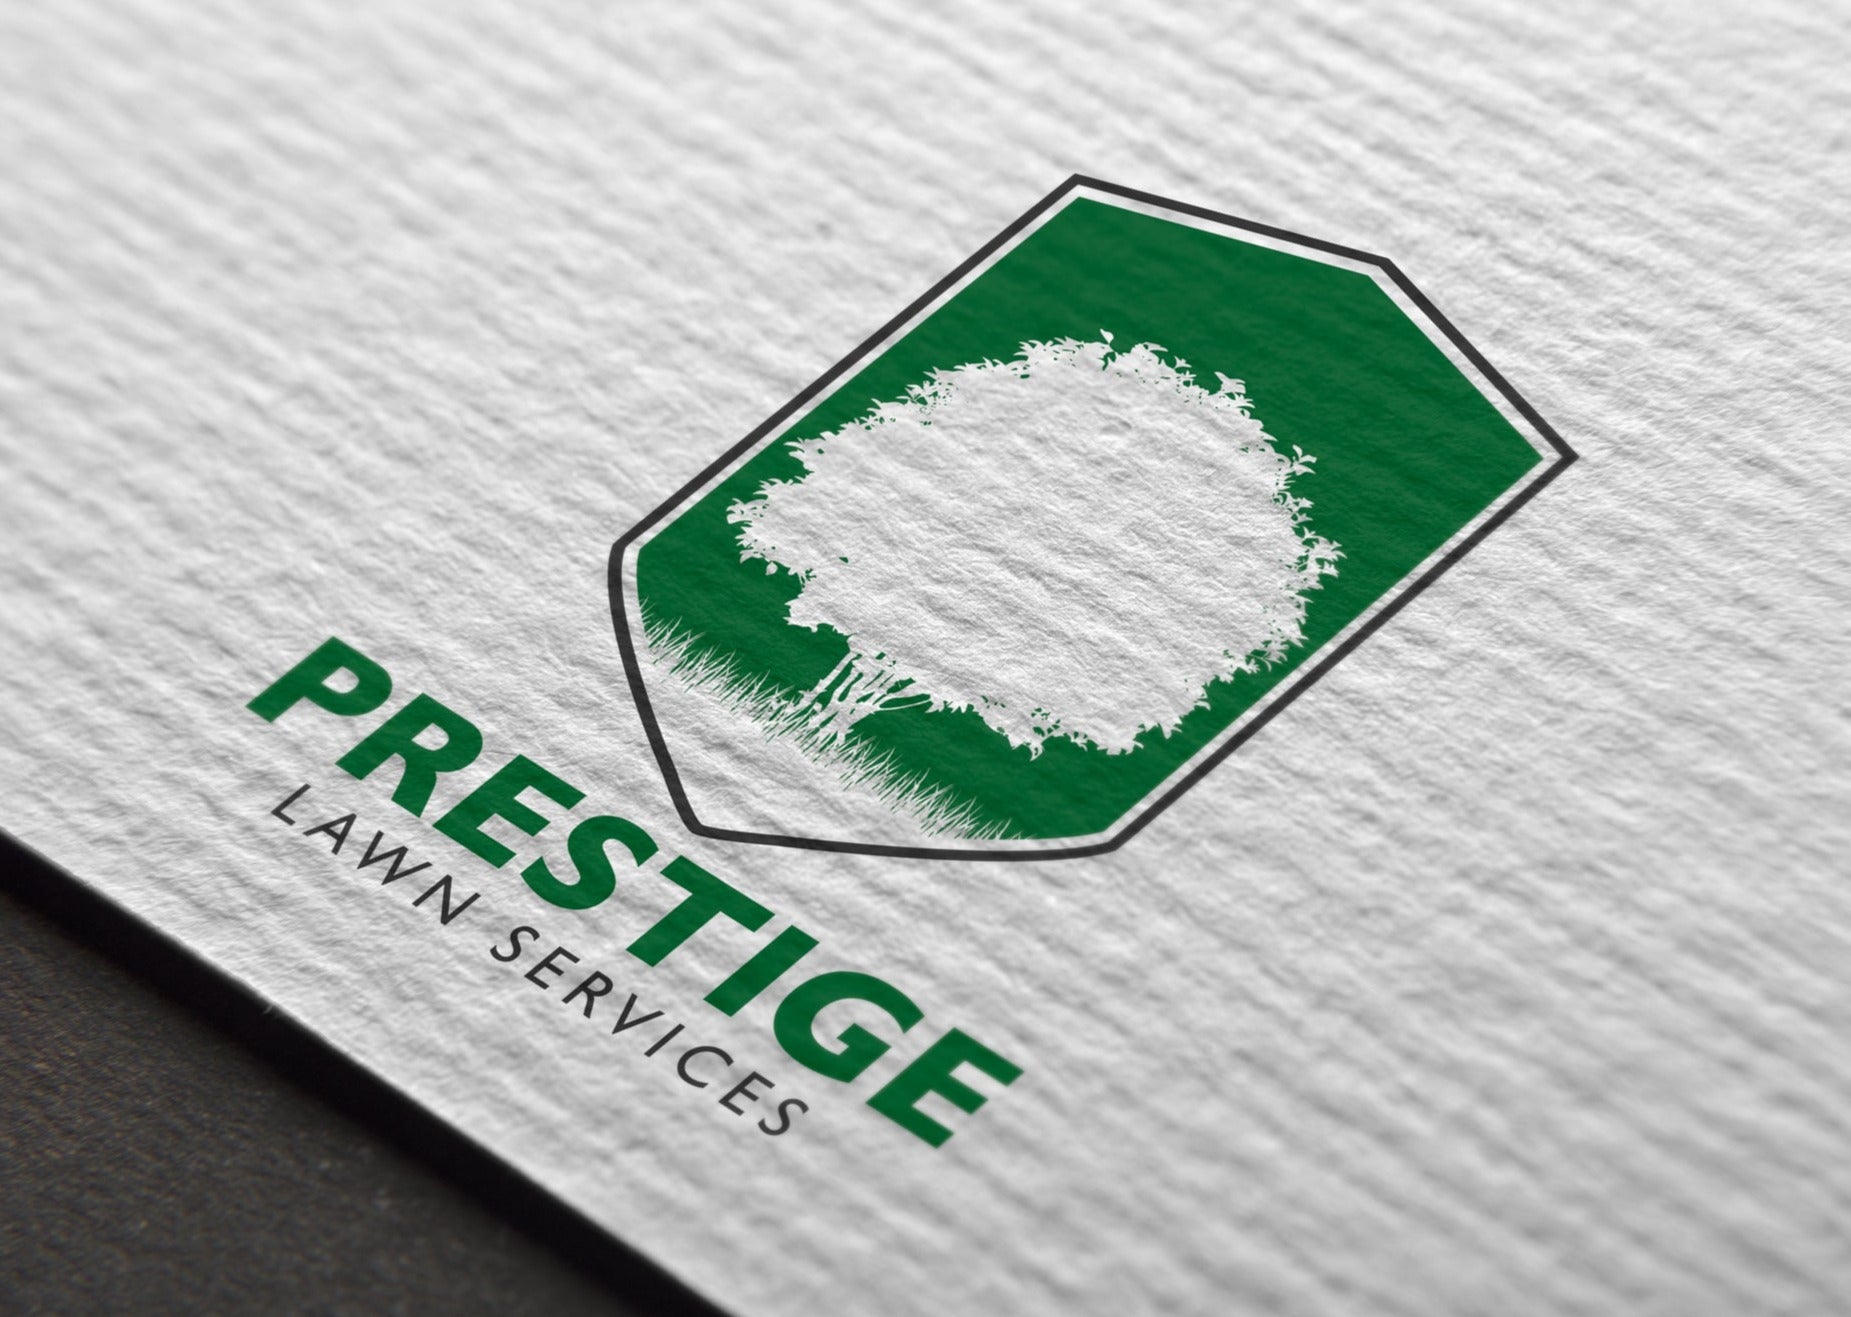 Landscaping Logo Design | Lawn Care Logo Design | Landscape Logo | Landscaper Logo | Landscaping Business | Lawn Care Business | Lawn Maintenance